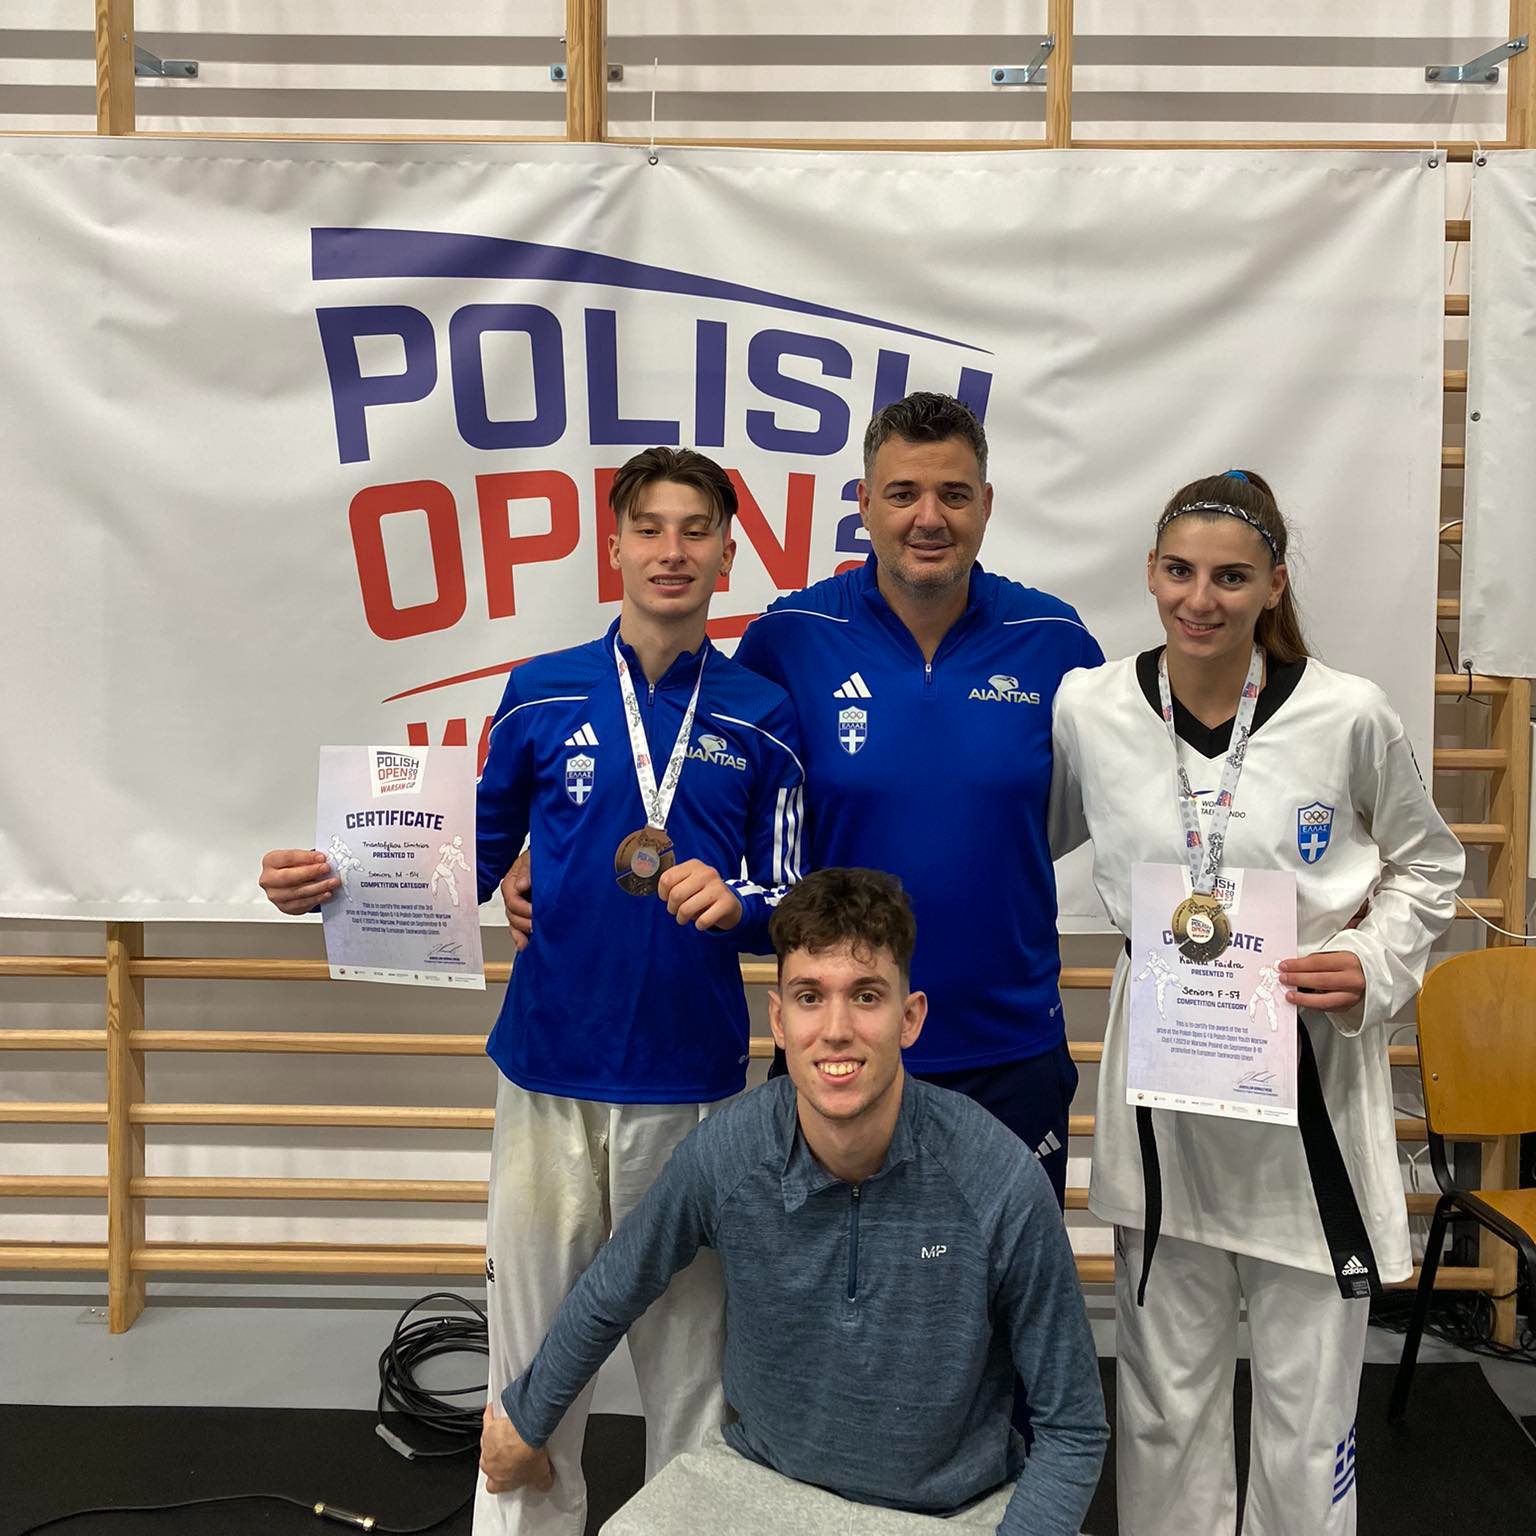 Polish Open 2023 : Χρυσό μετάλλιο η Καλτέκη, 3ος ο Τριανταφύλλου